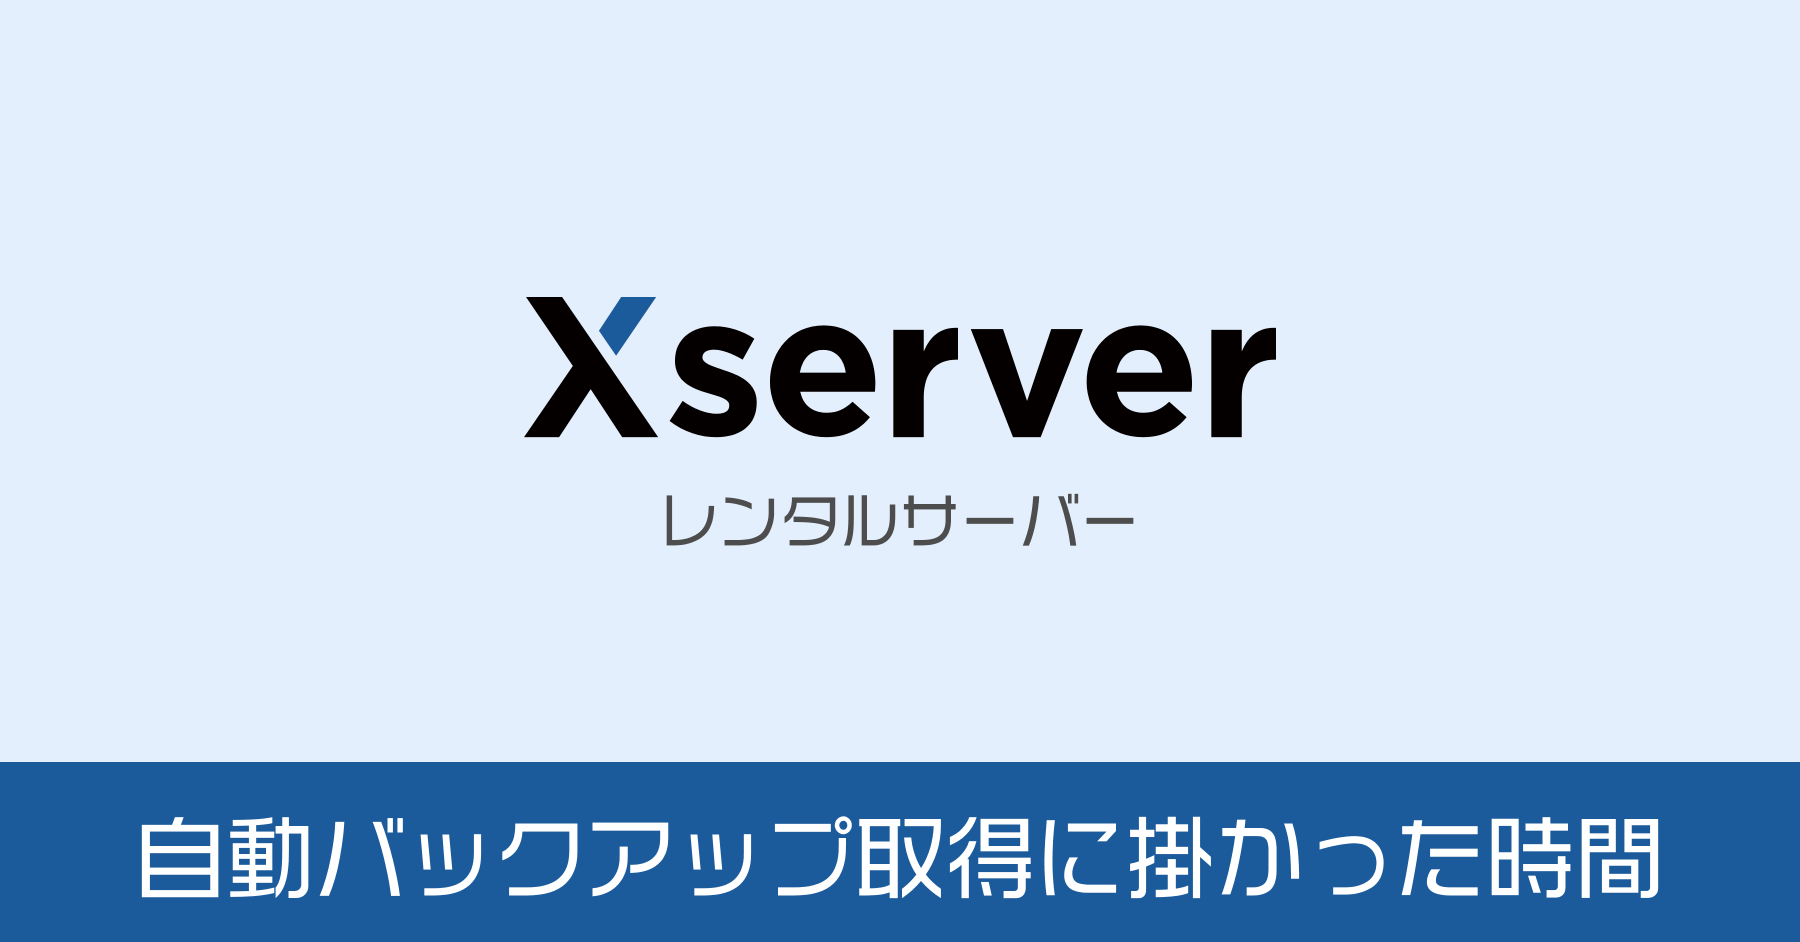 XSERVER 自動バックアップデータ取得に掛かった時間。準備中から進まない？！